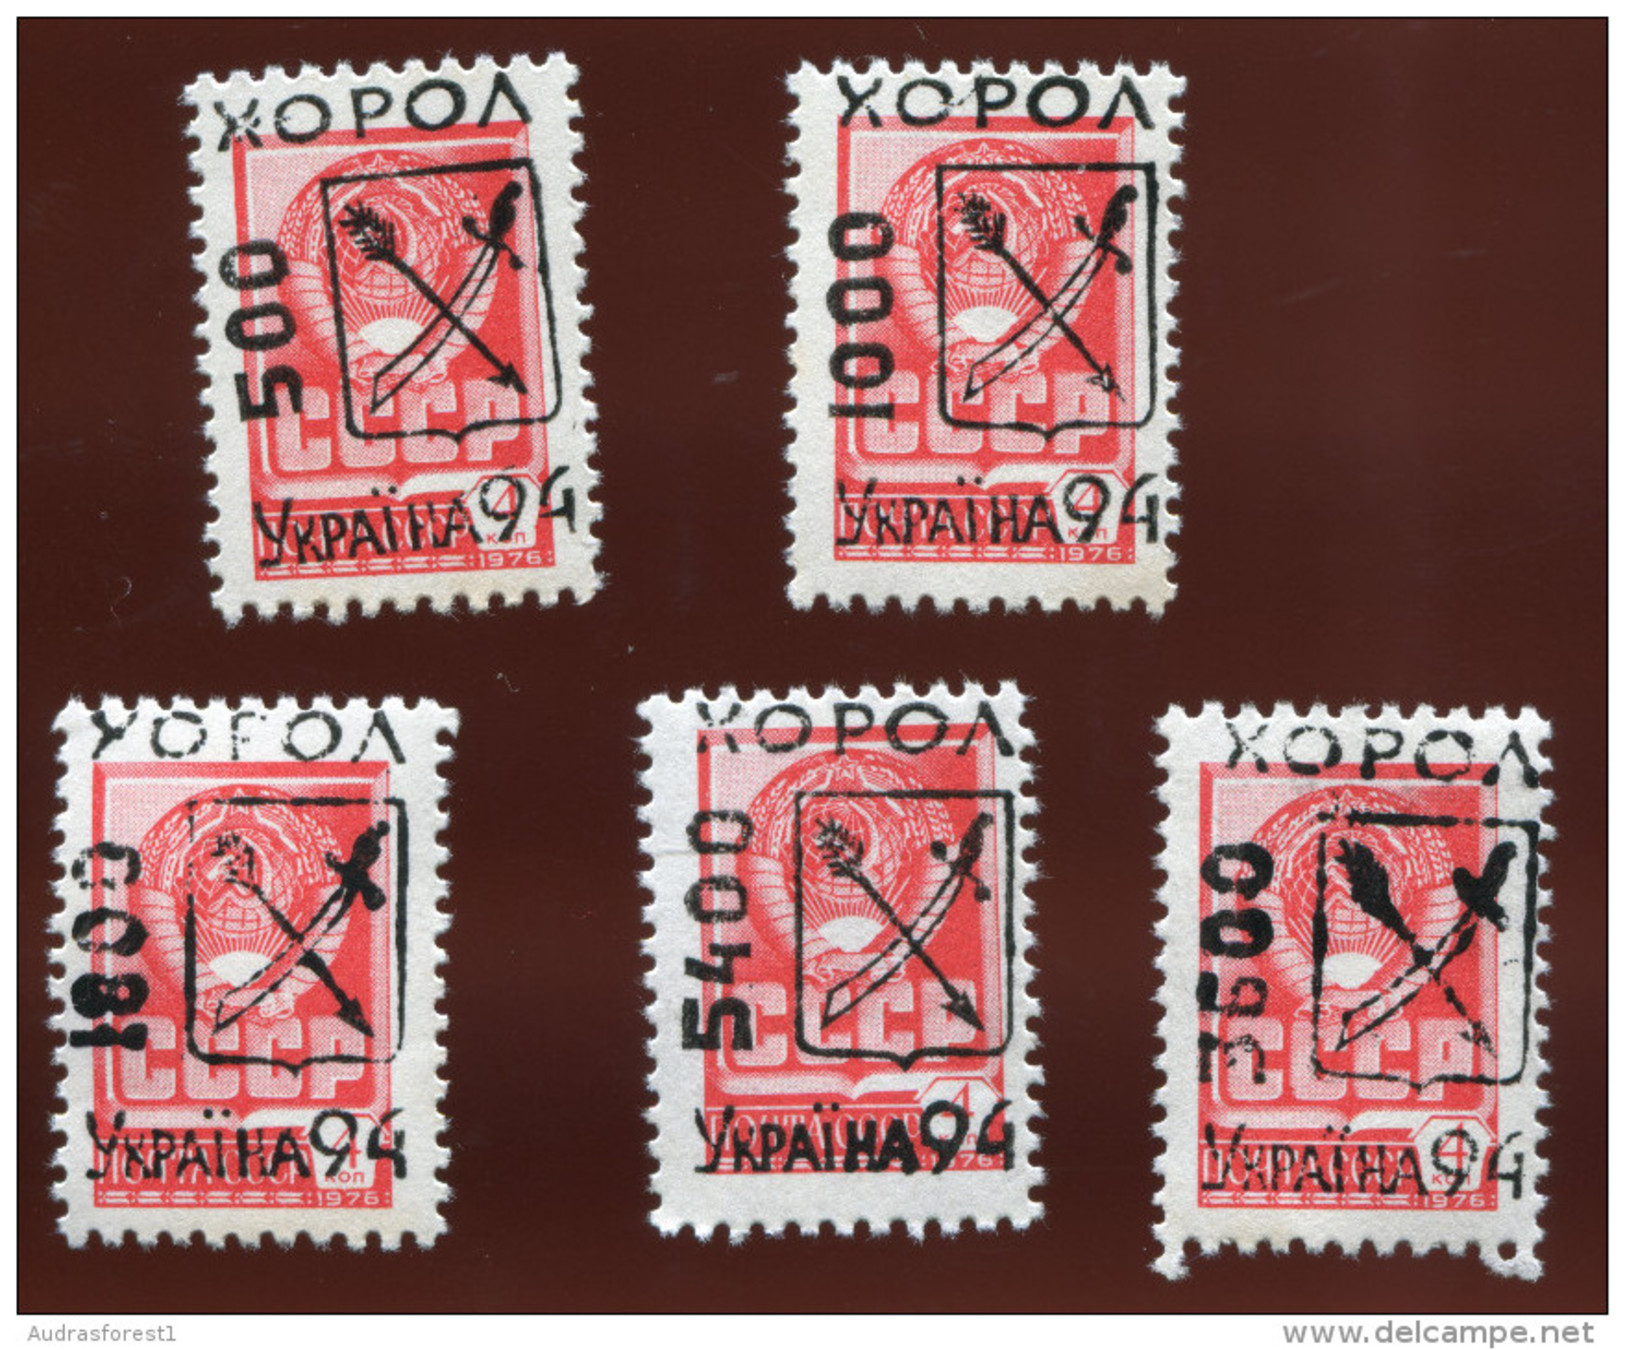 1994 Ukraine Local Post; Khorol Overprints On 1976 USSR 4k Definitive Stamp In A Set Of 5 Stamps Coat Of Arms - Ukraine